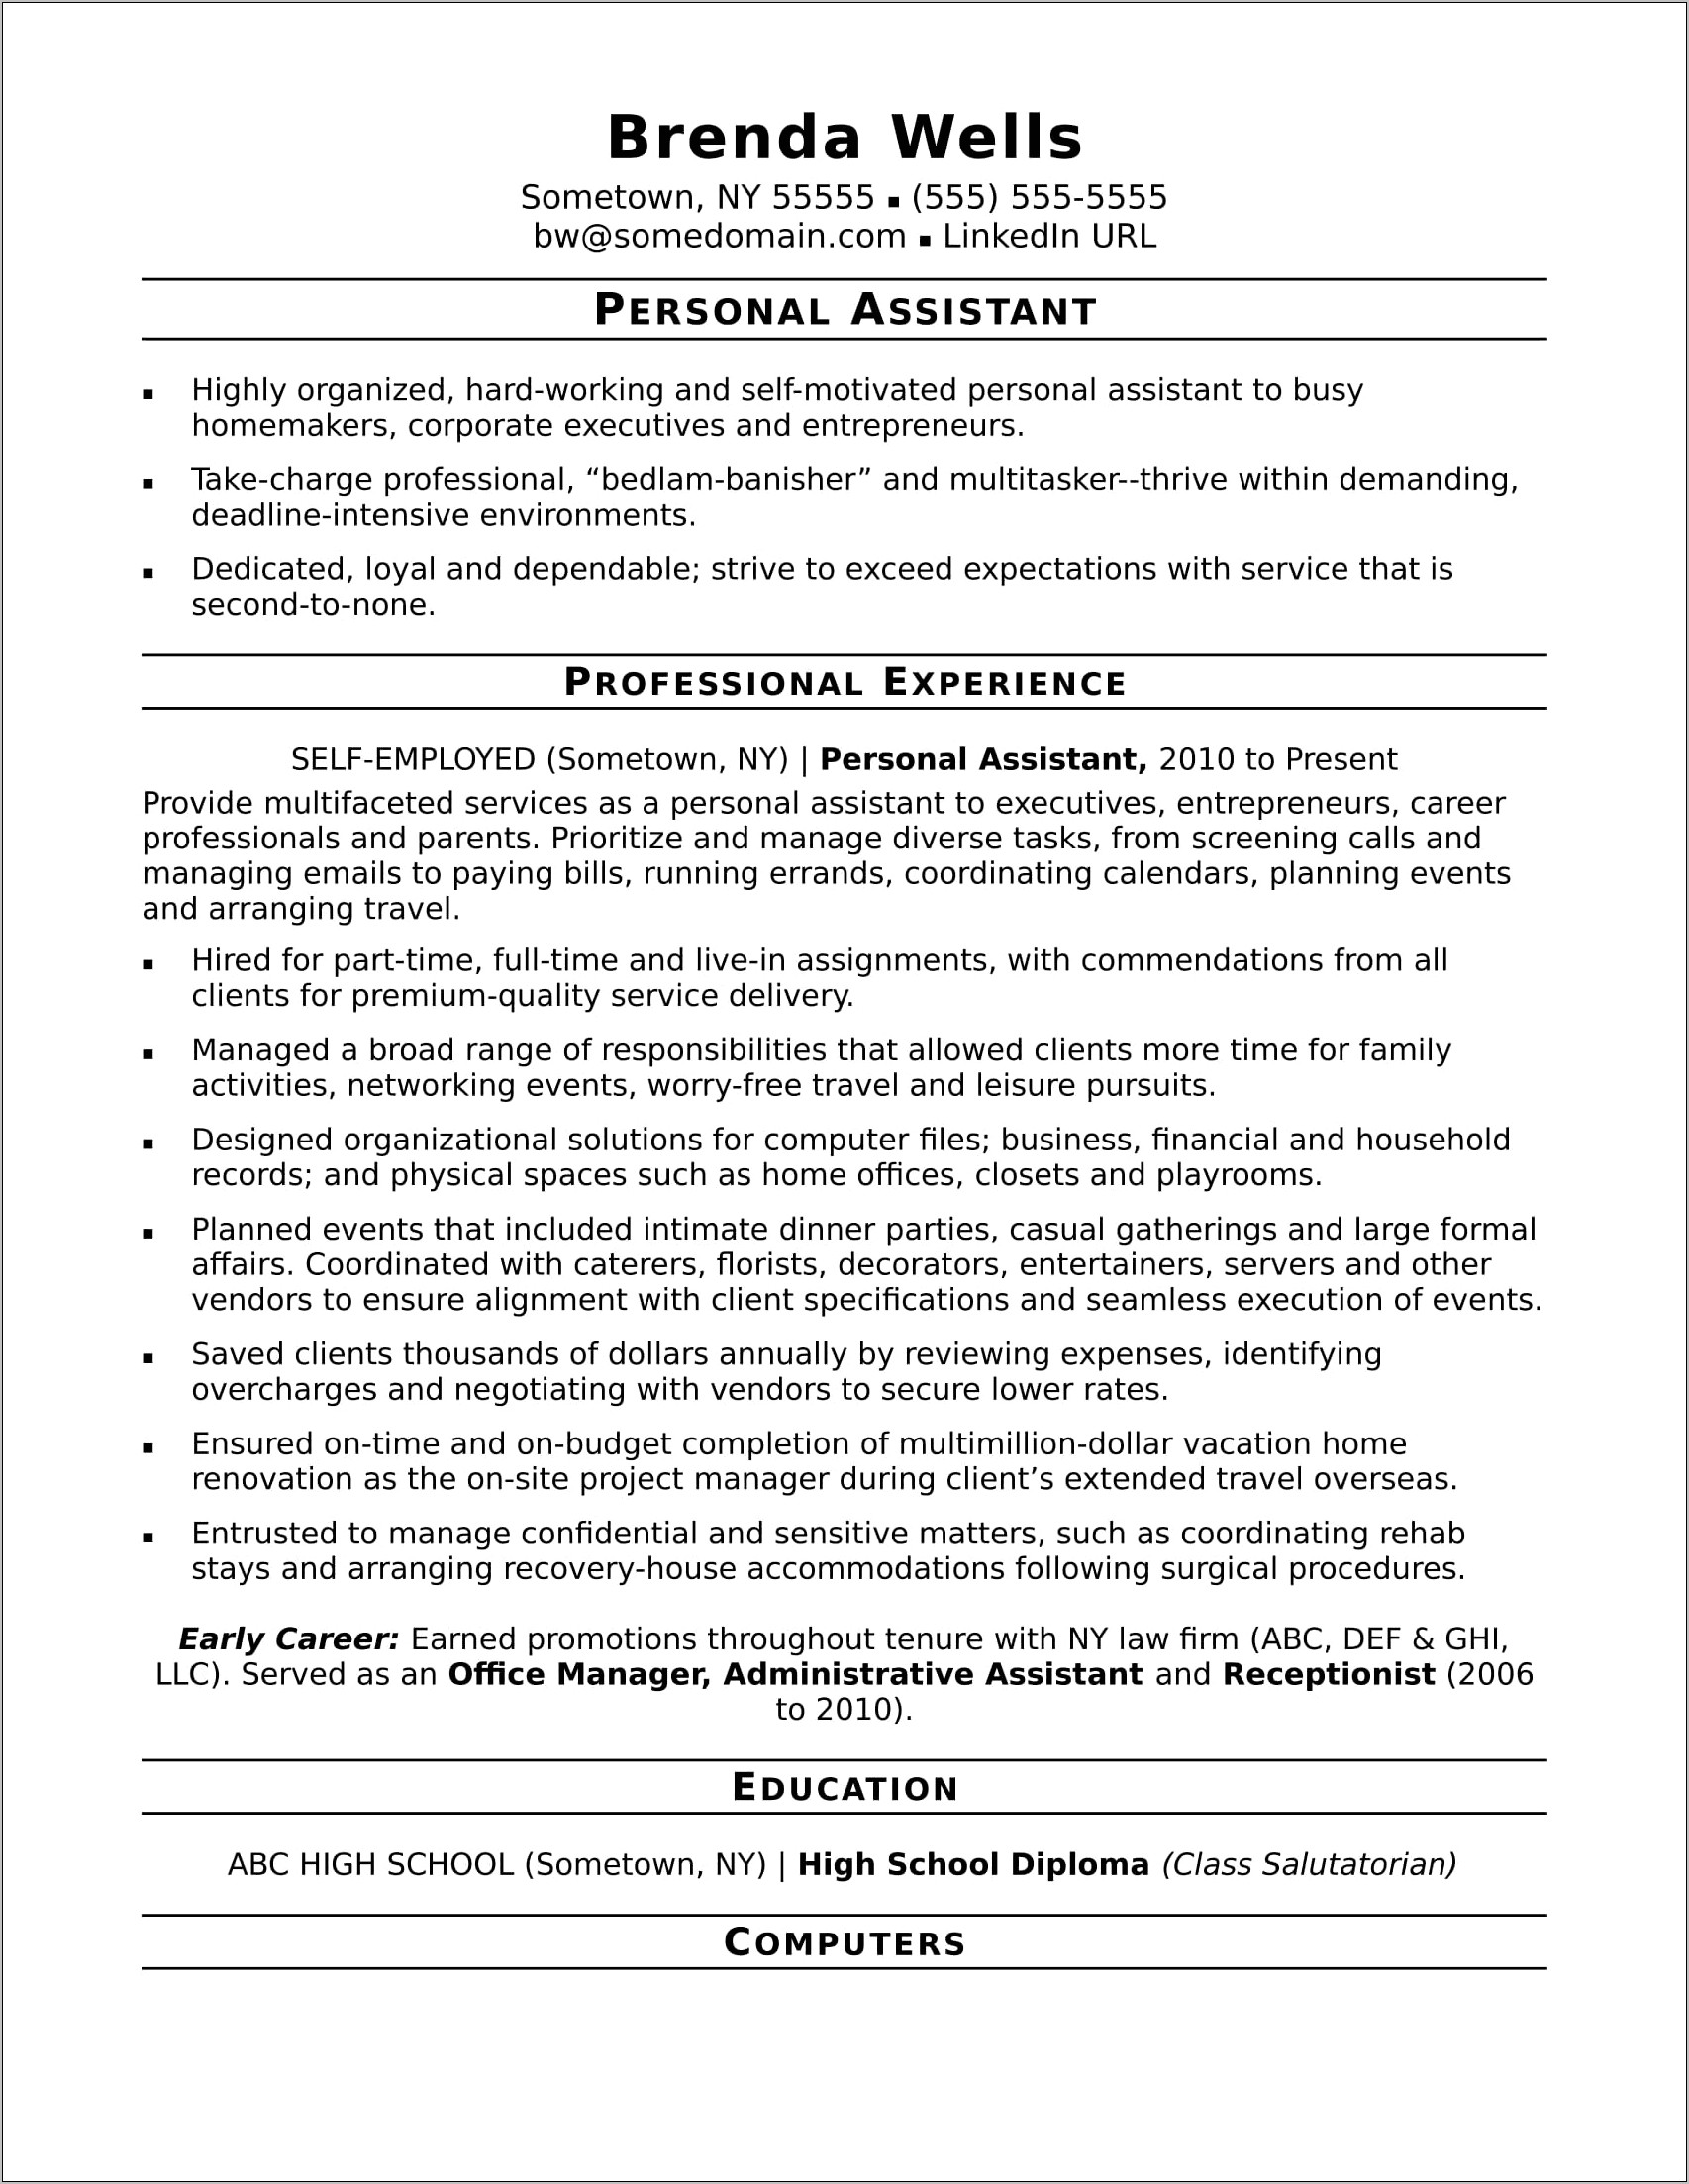 Resume Entrepreneur Career Profile Samples